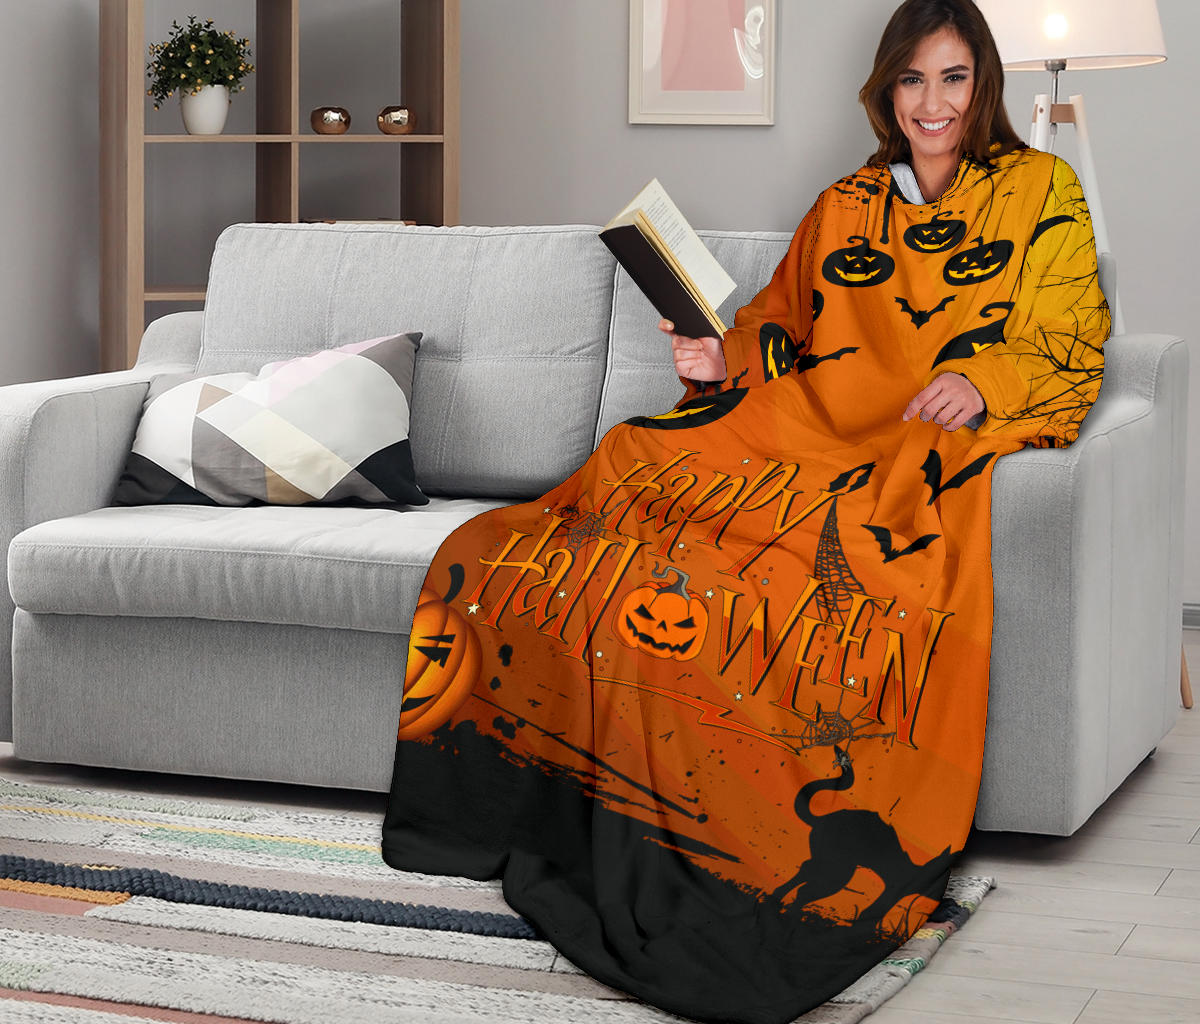 Happy Halloween Sleeve Blanket